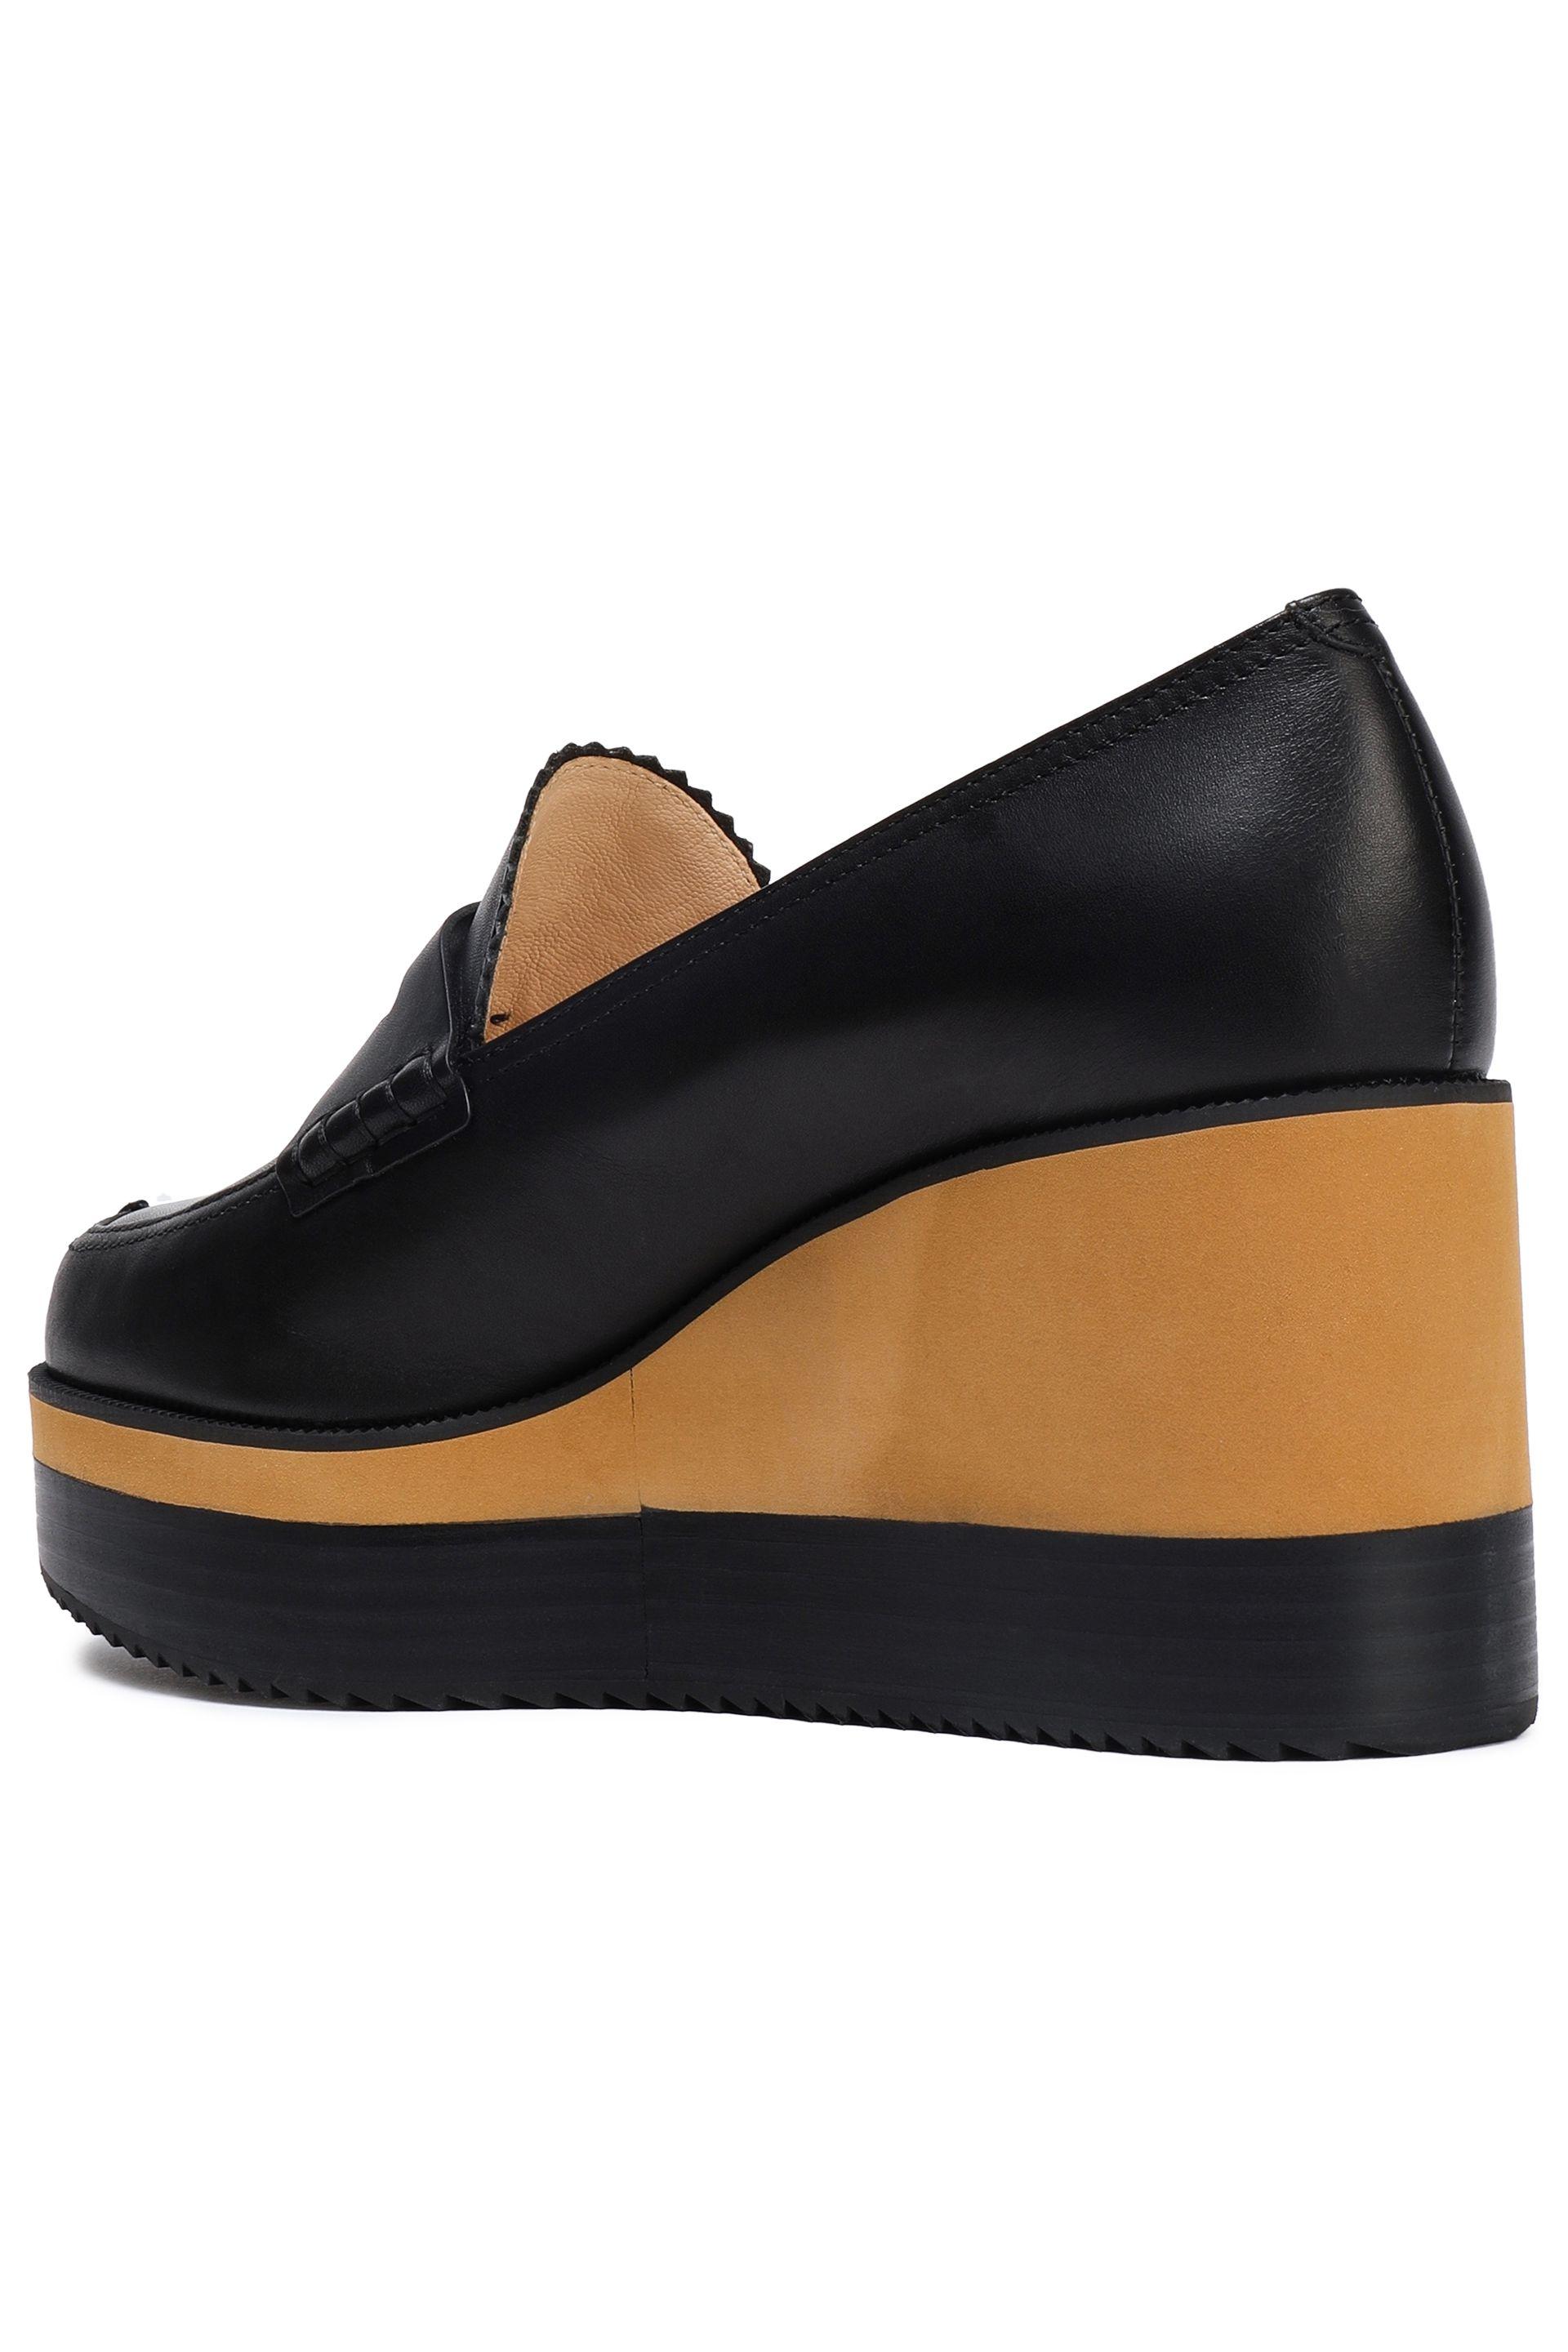 Jil Sander Navy Leather Wedge Loafers in Black | Lyst